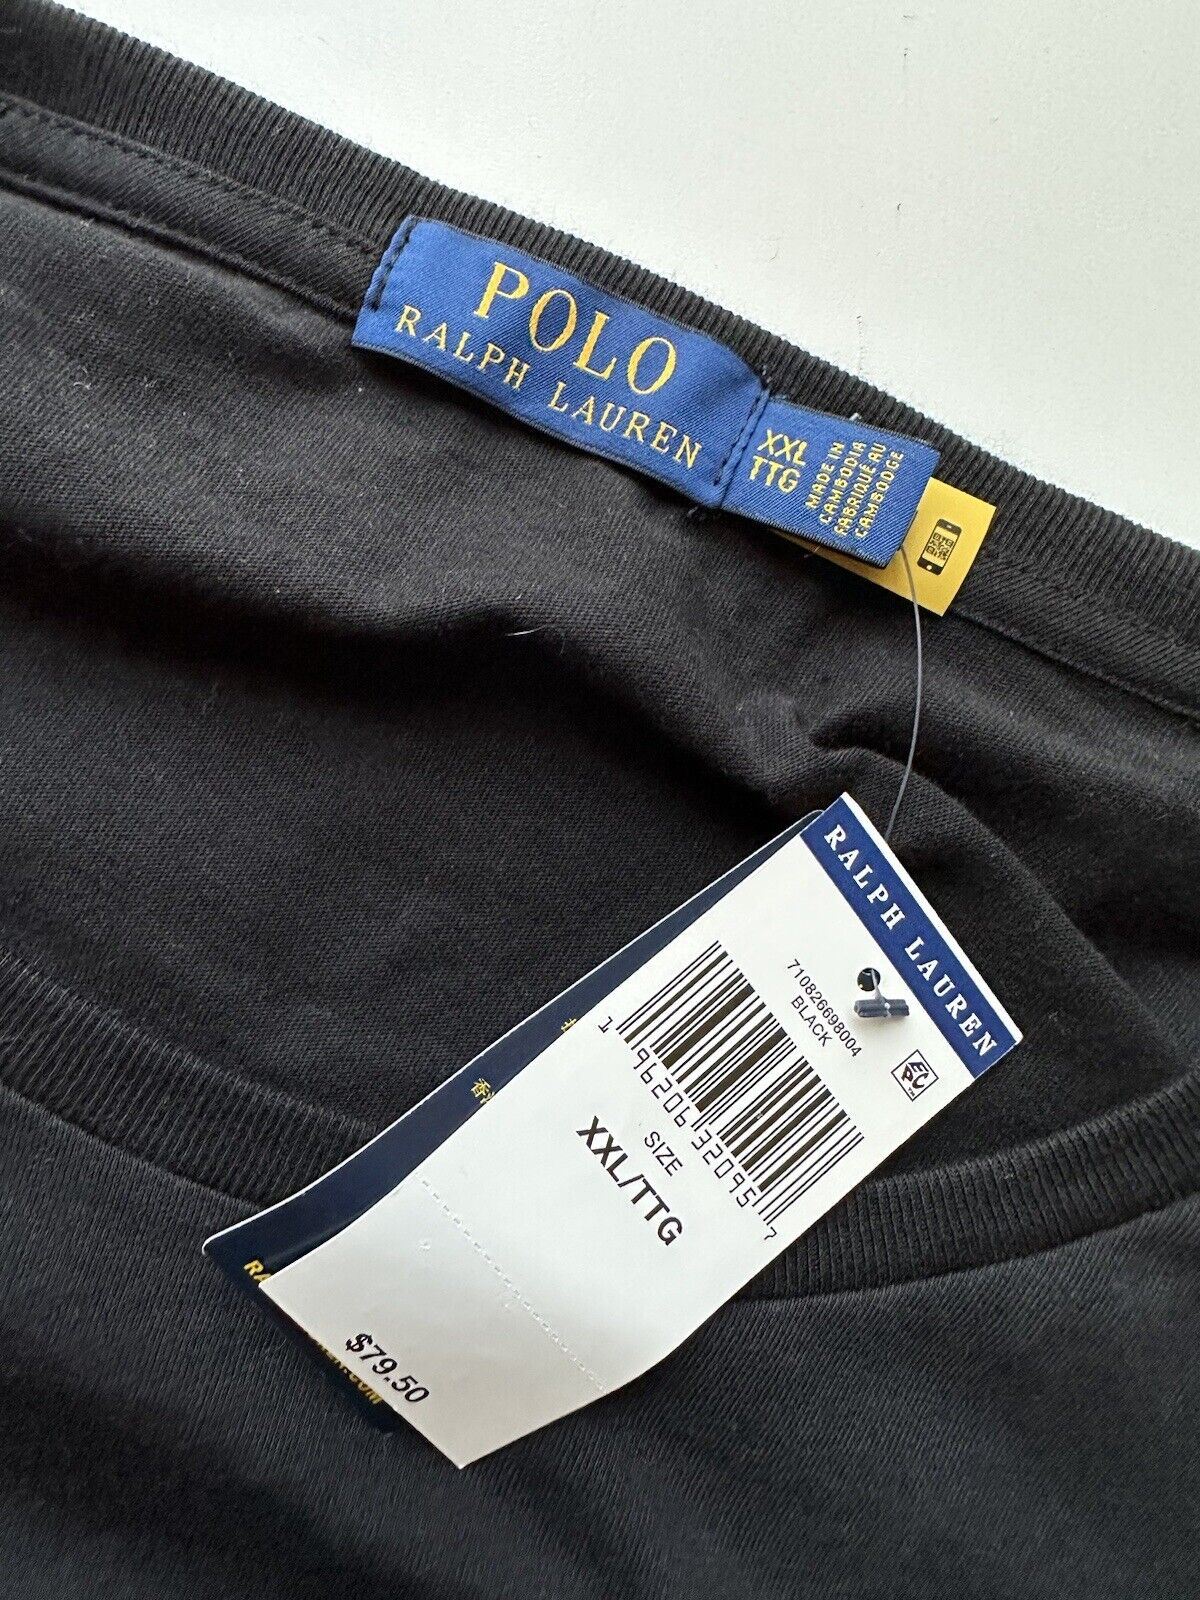 NWT Polo Ralph Lauren Long Sleeve Bear T-Shirt Black 2XL/2TG